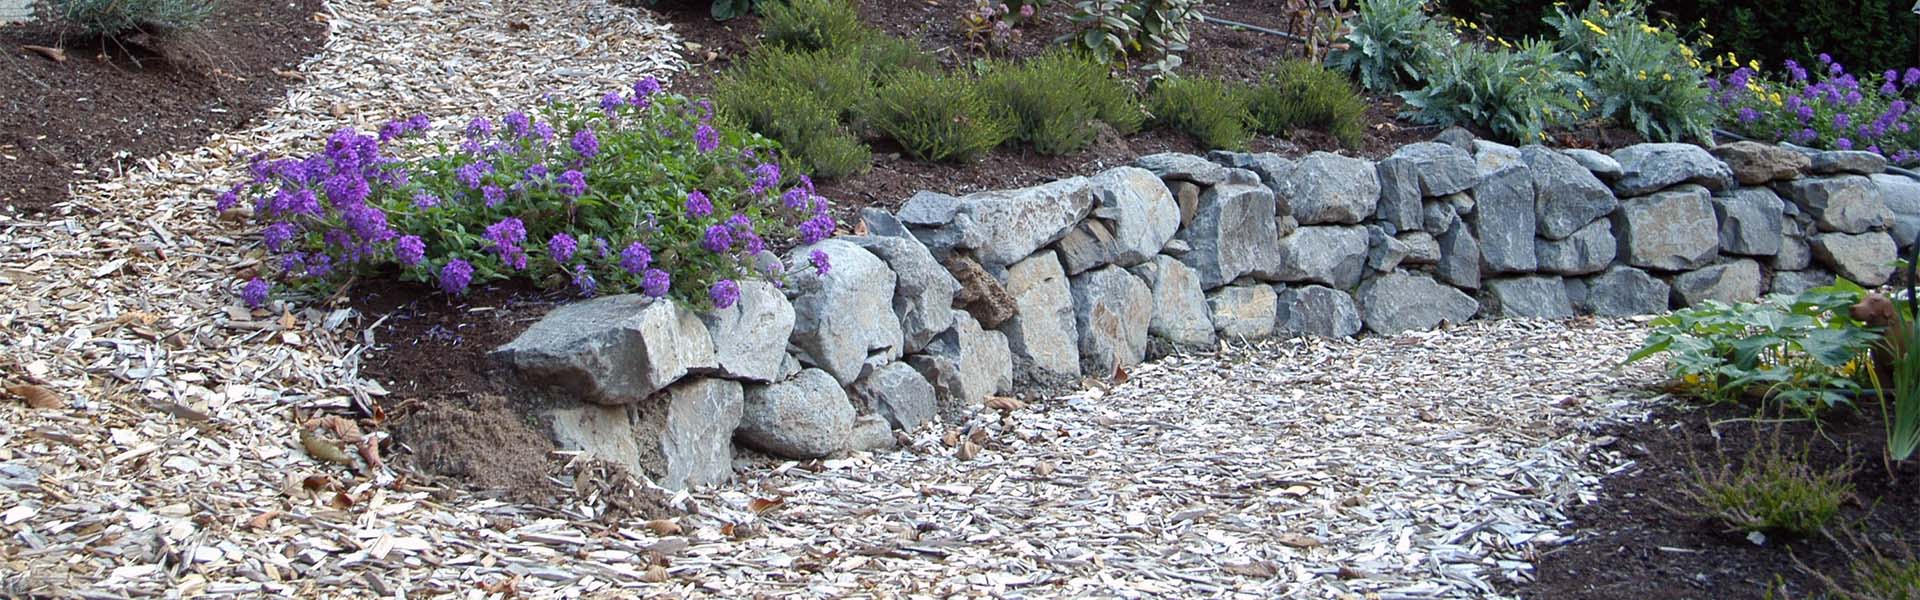 A boulder Home retaining wall